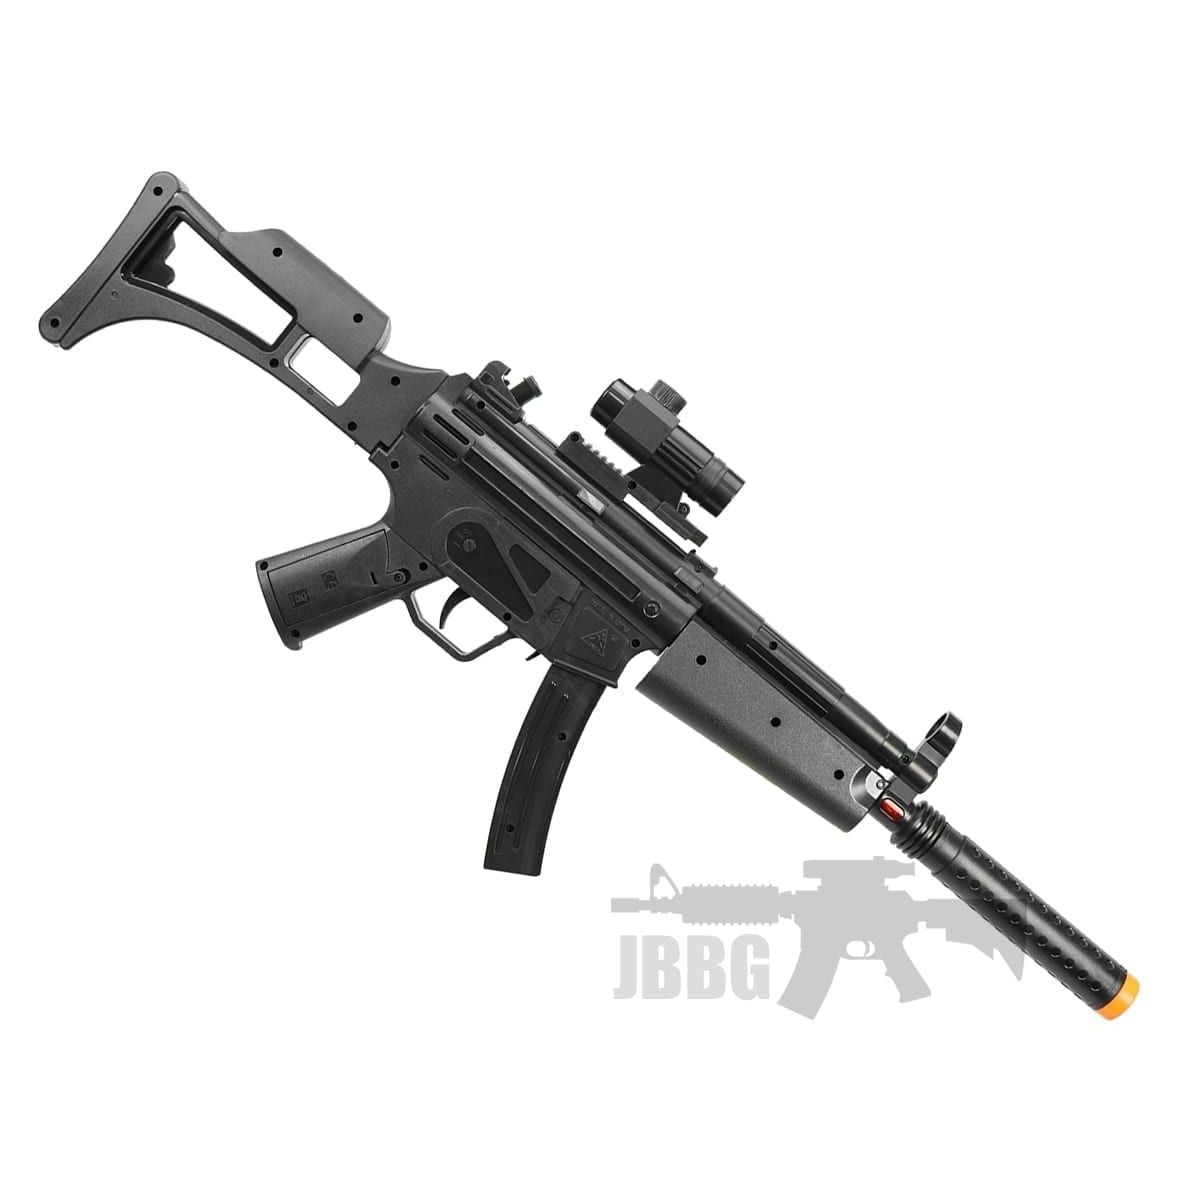 MP5 Style Fun Toy Prop Submachine Gun - Just Airsoft Guns